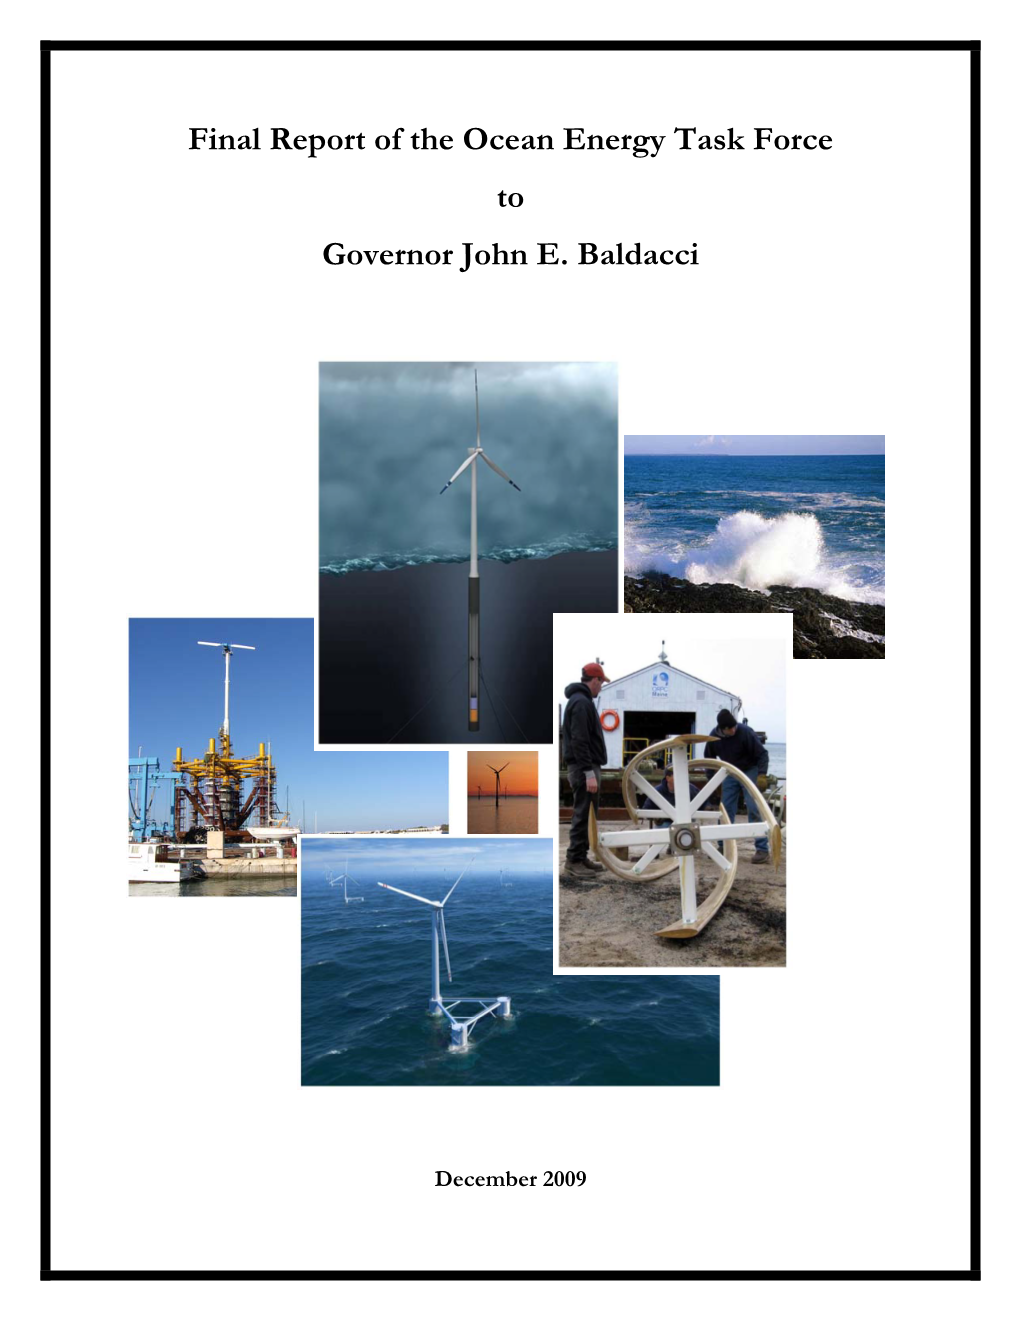 Ocean Energy Task Force Final Report, 2009